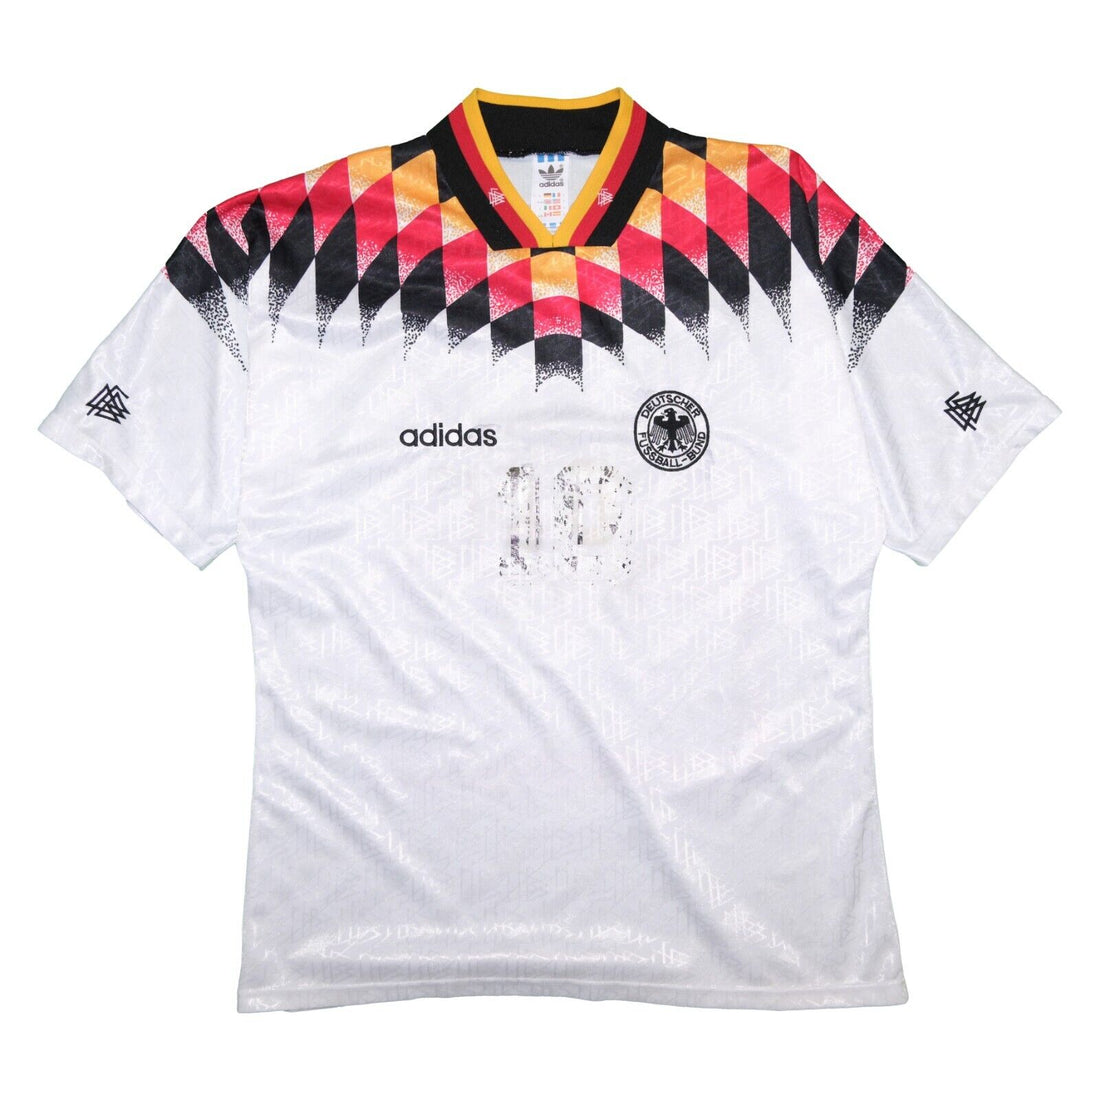 Vintage Germany Adidas Football Kit Size Large 1994 90s Deutschland Made England